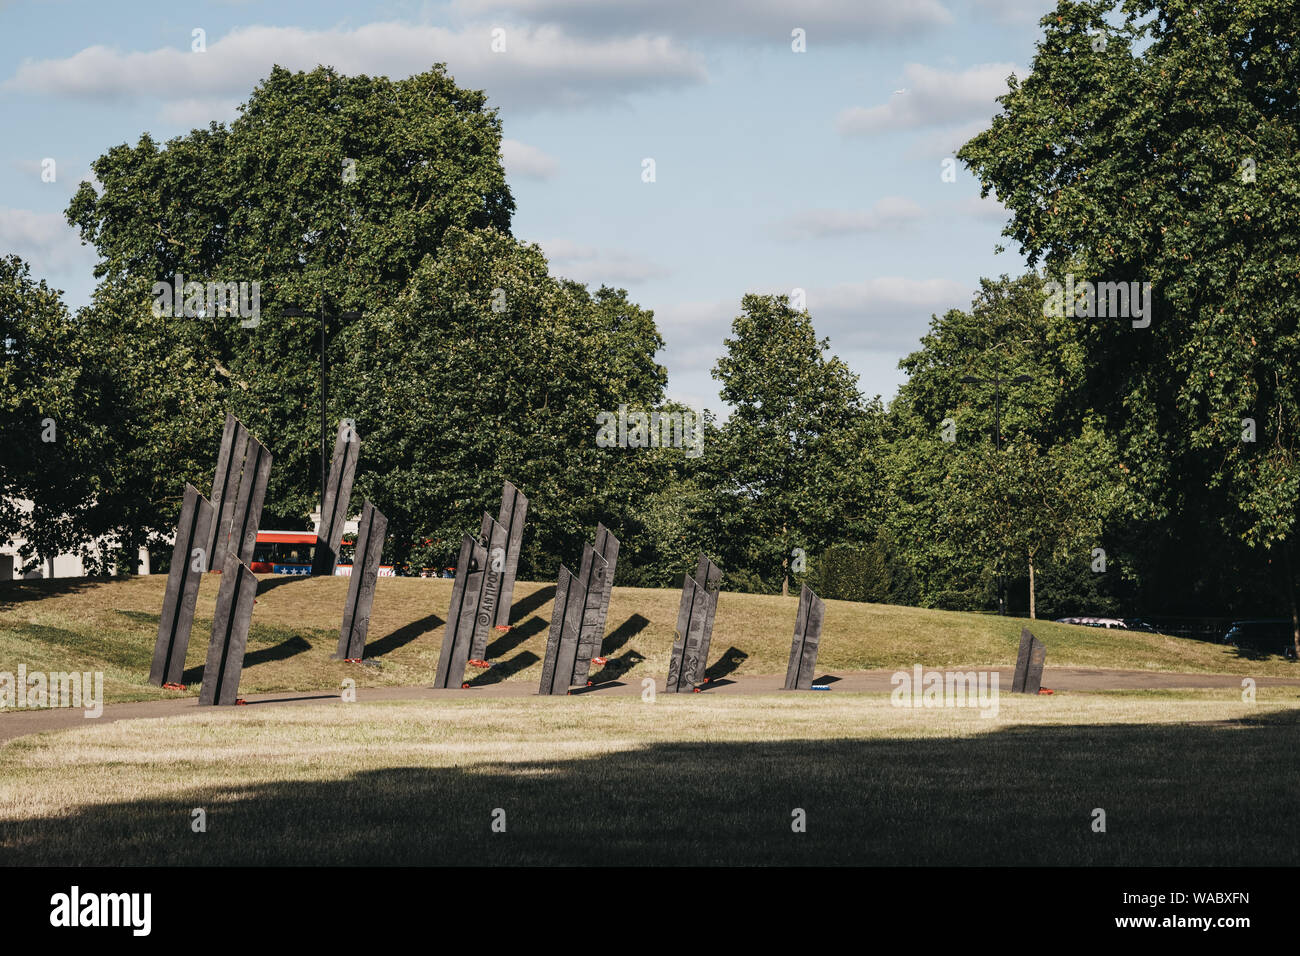 London, UK - July 15, 2019: View of New Zealand War Memorial by John Hardwick-Smith and Paul Dibble in London, a memorial to the war dead of New Zeala Stock Photo